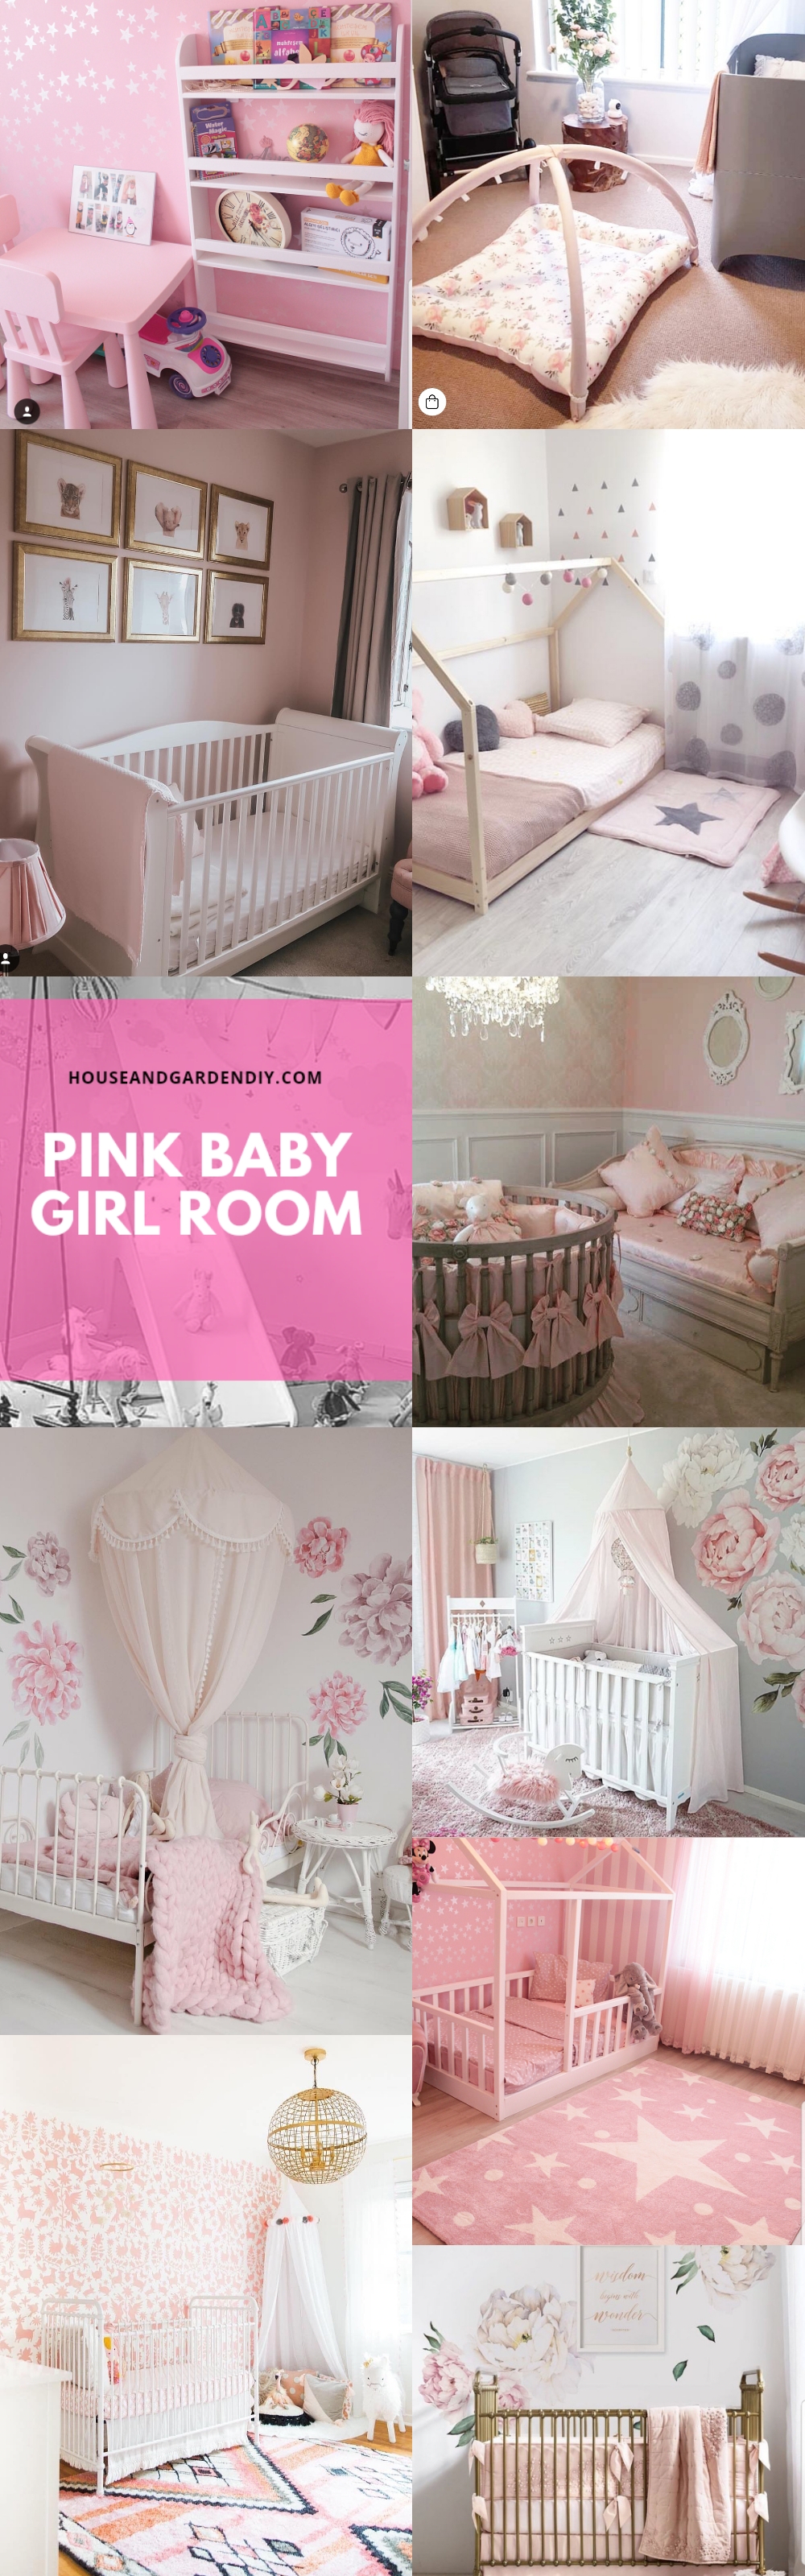 pink baby girl room